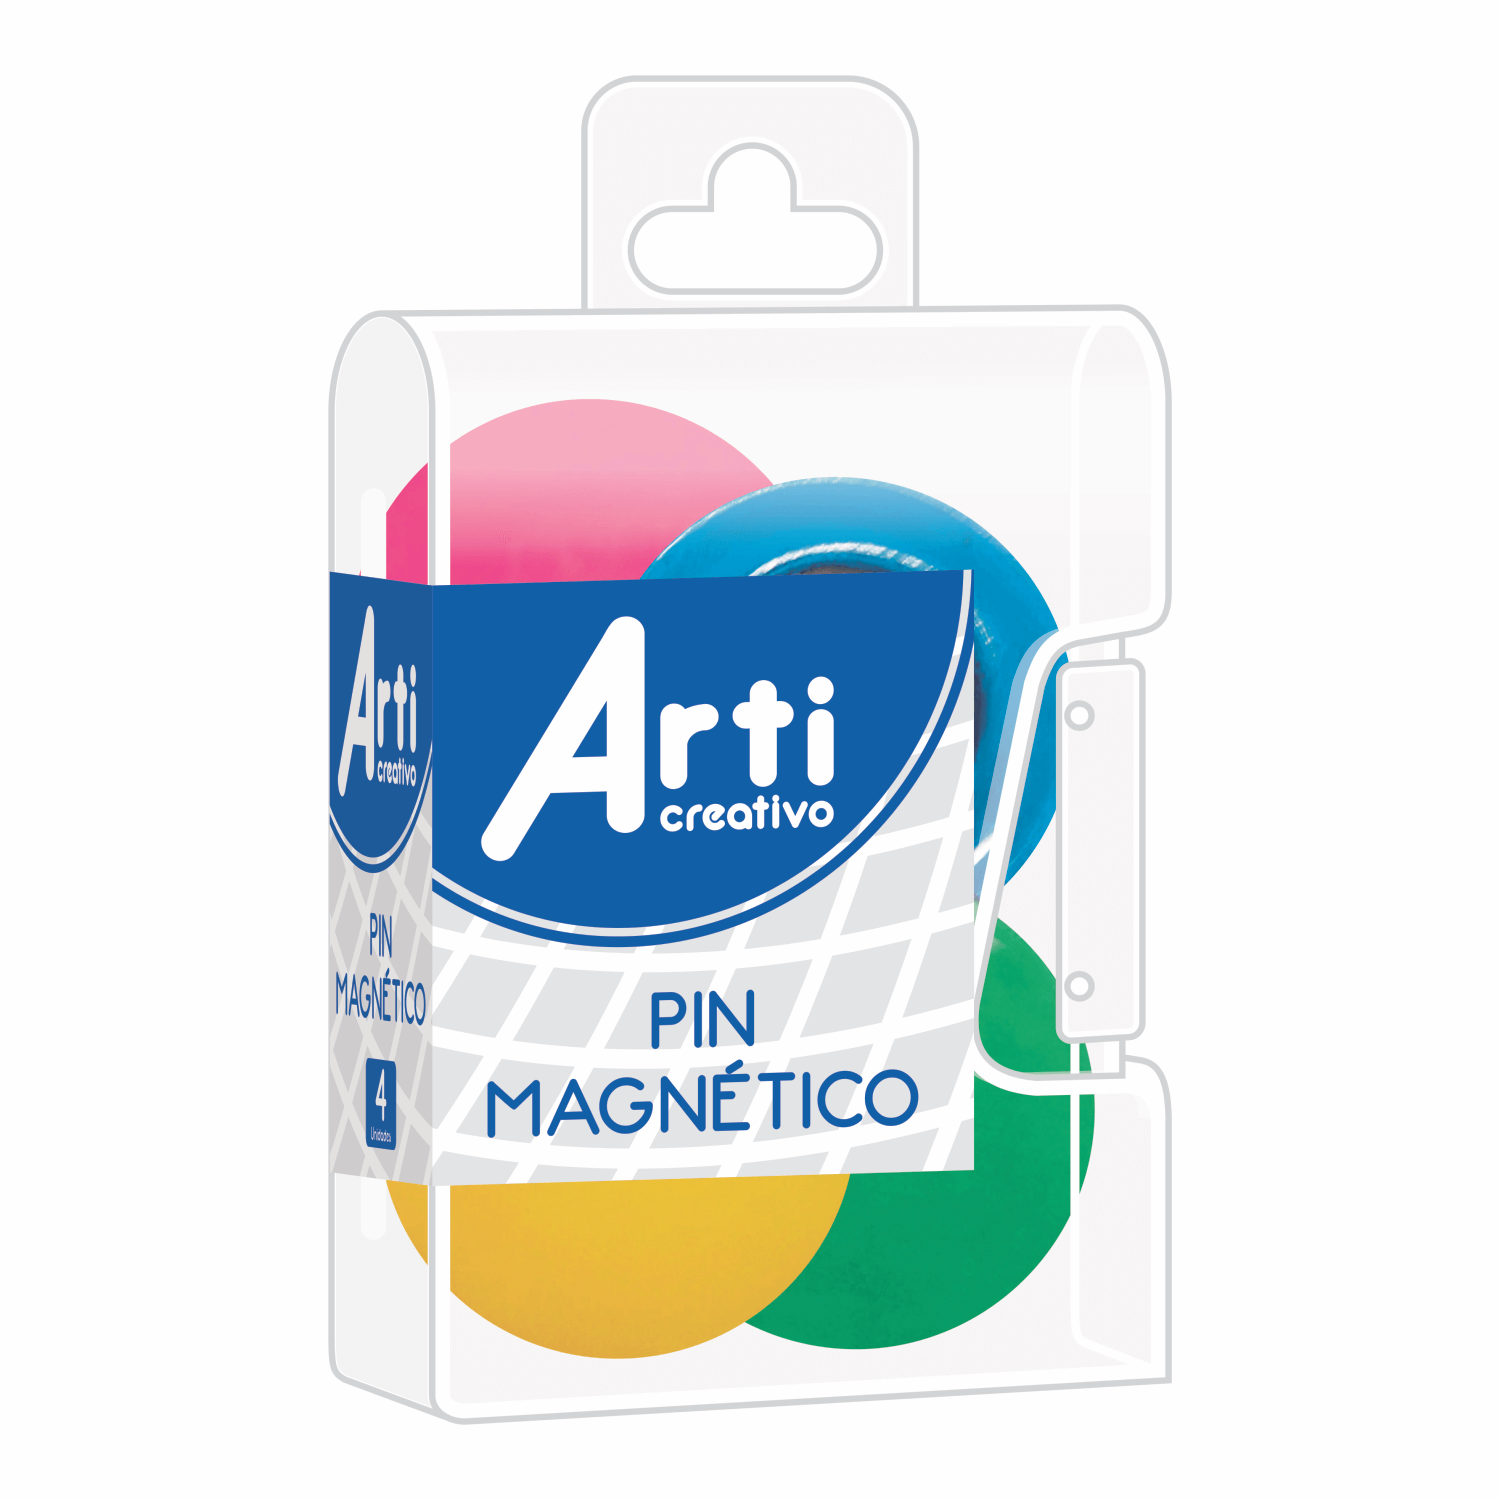 MINIPACK PIN MAGNÉTICO ARTI CREATIVO